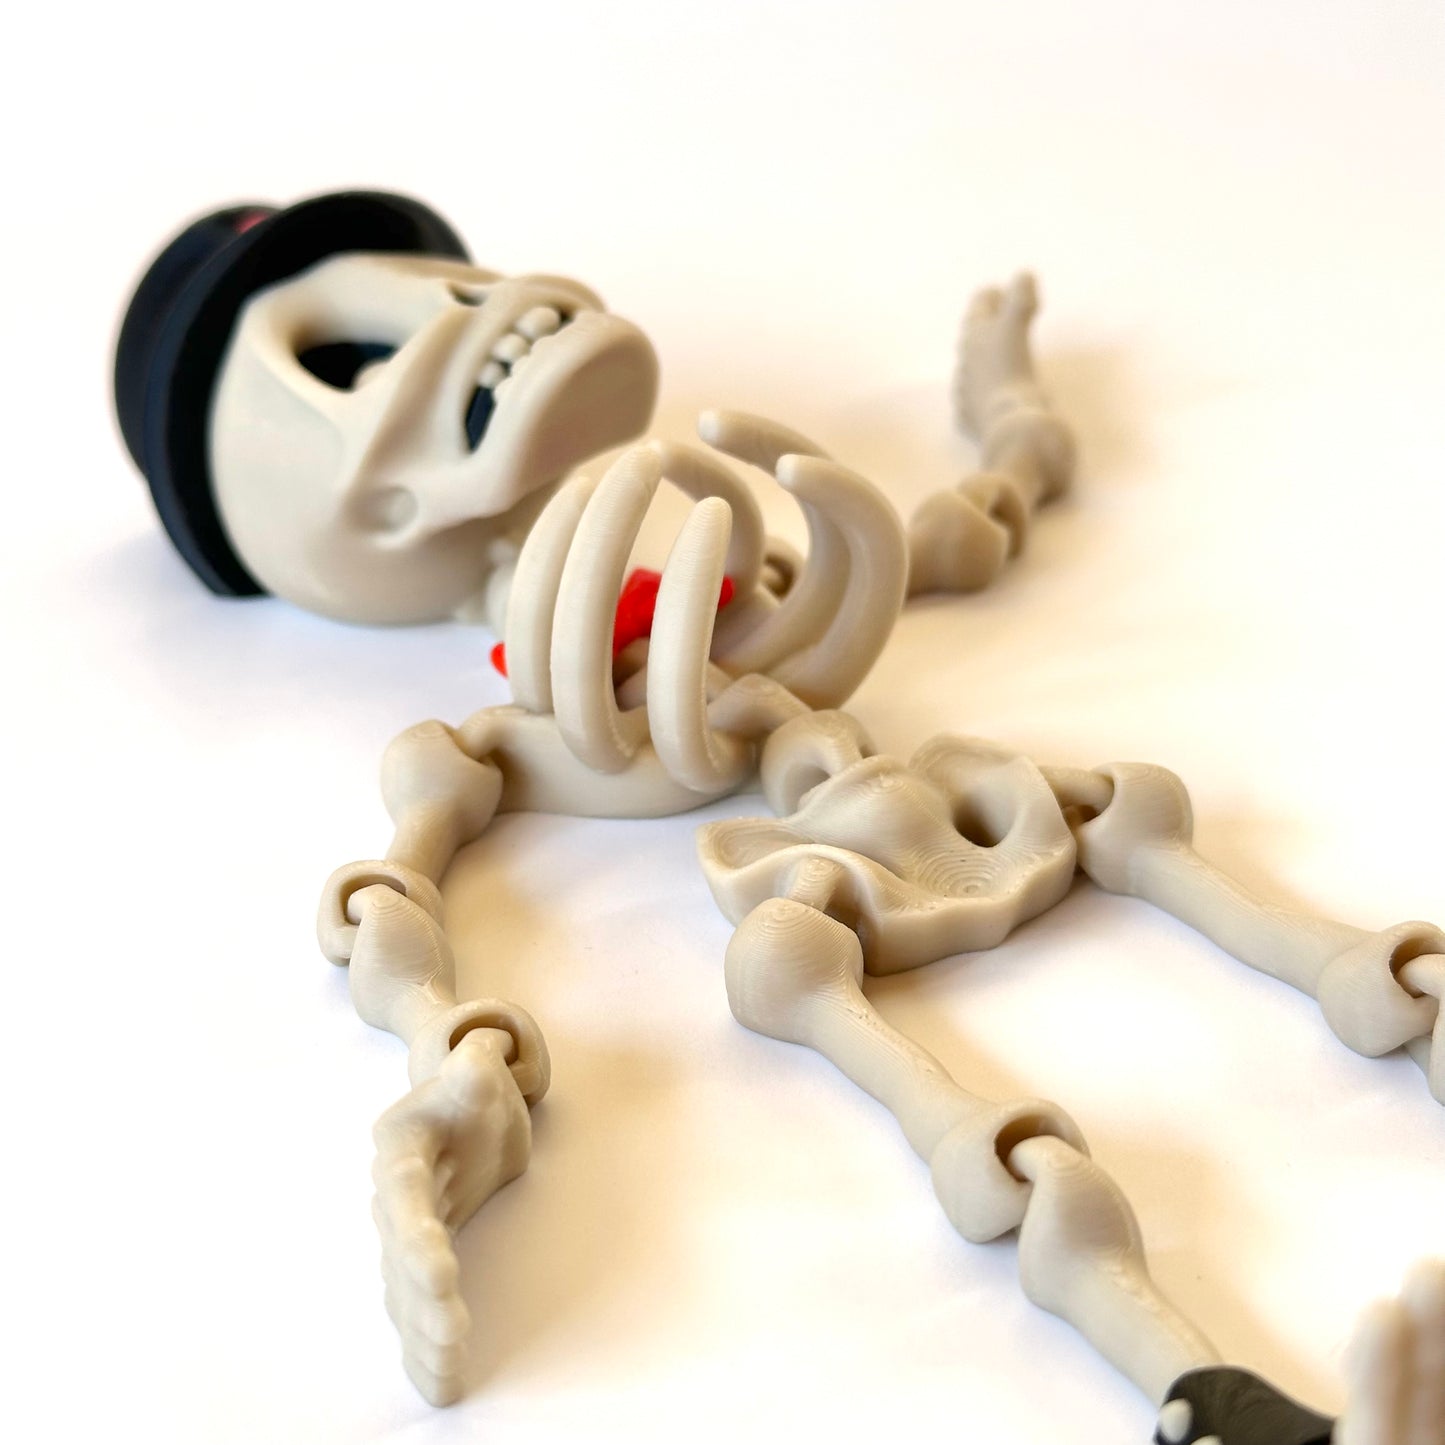 Flexi Bone Daddy - 3D Printed Articulating Figure